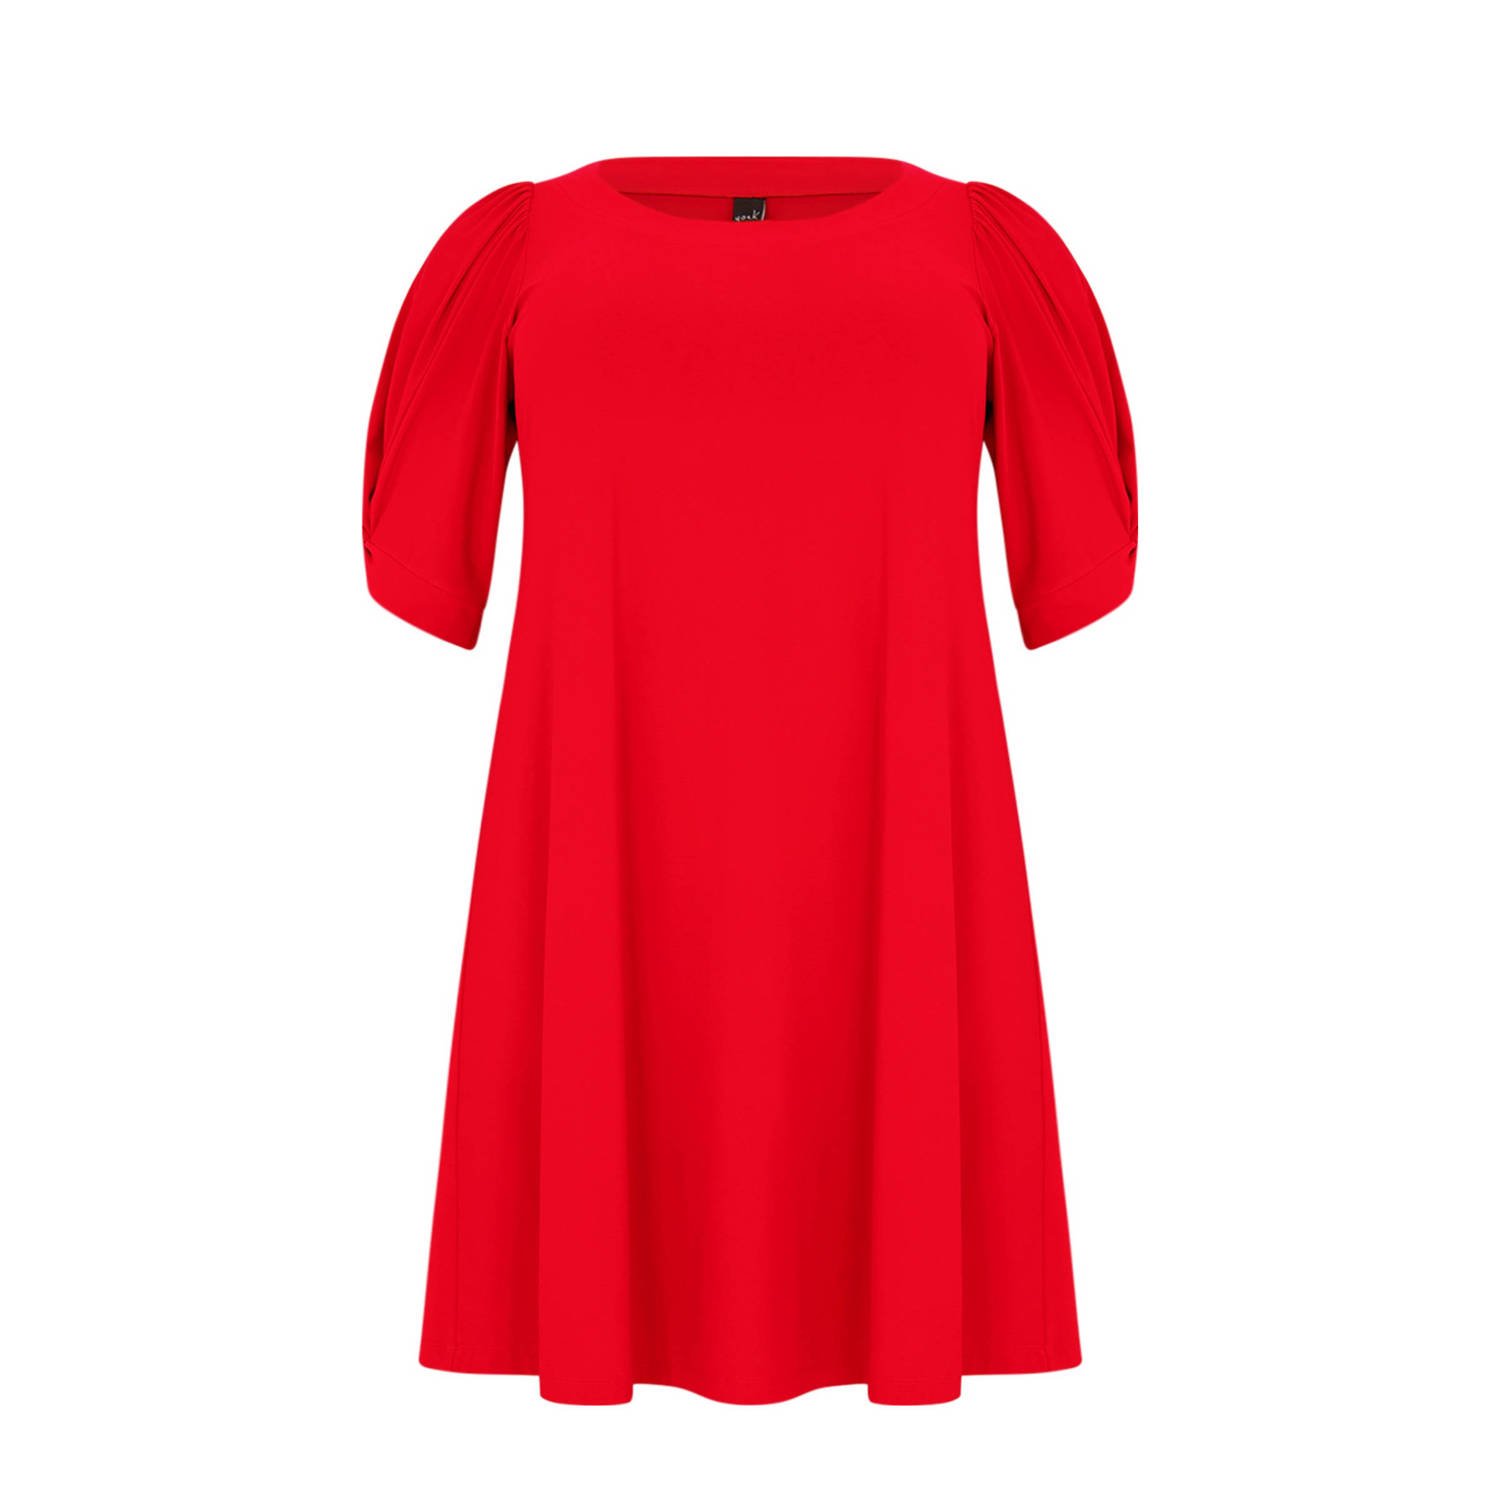 Yoek jurk Dolce rood